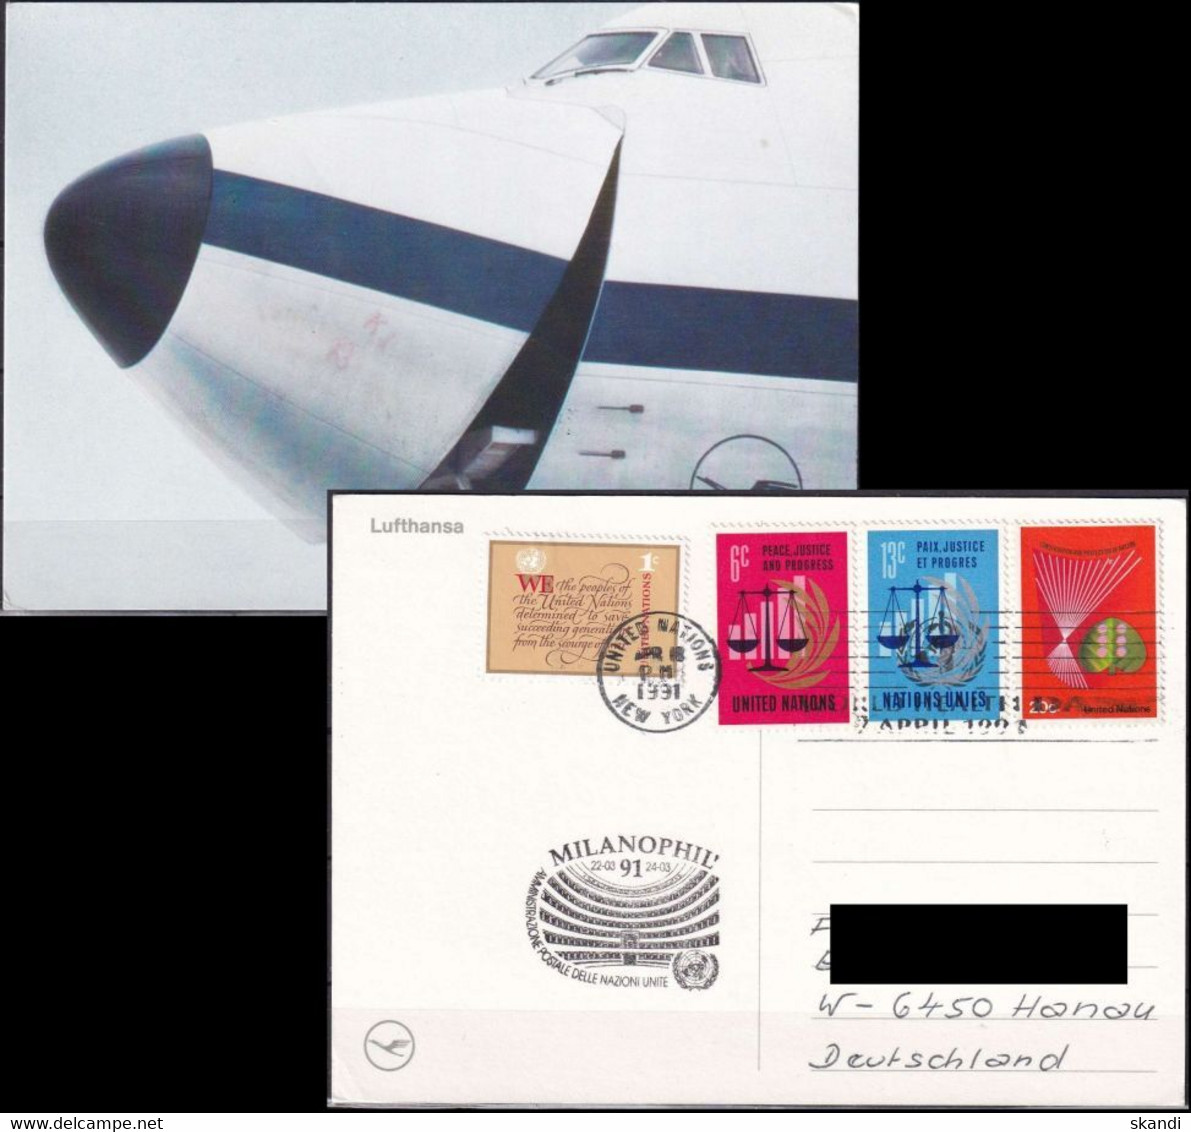 UNO NEW YORK 1991 Postkarte Milanophil'91 Lufthansa - Covers & Documents